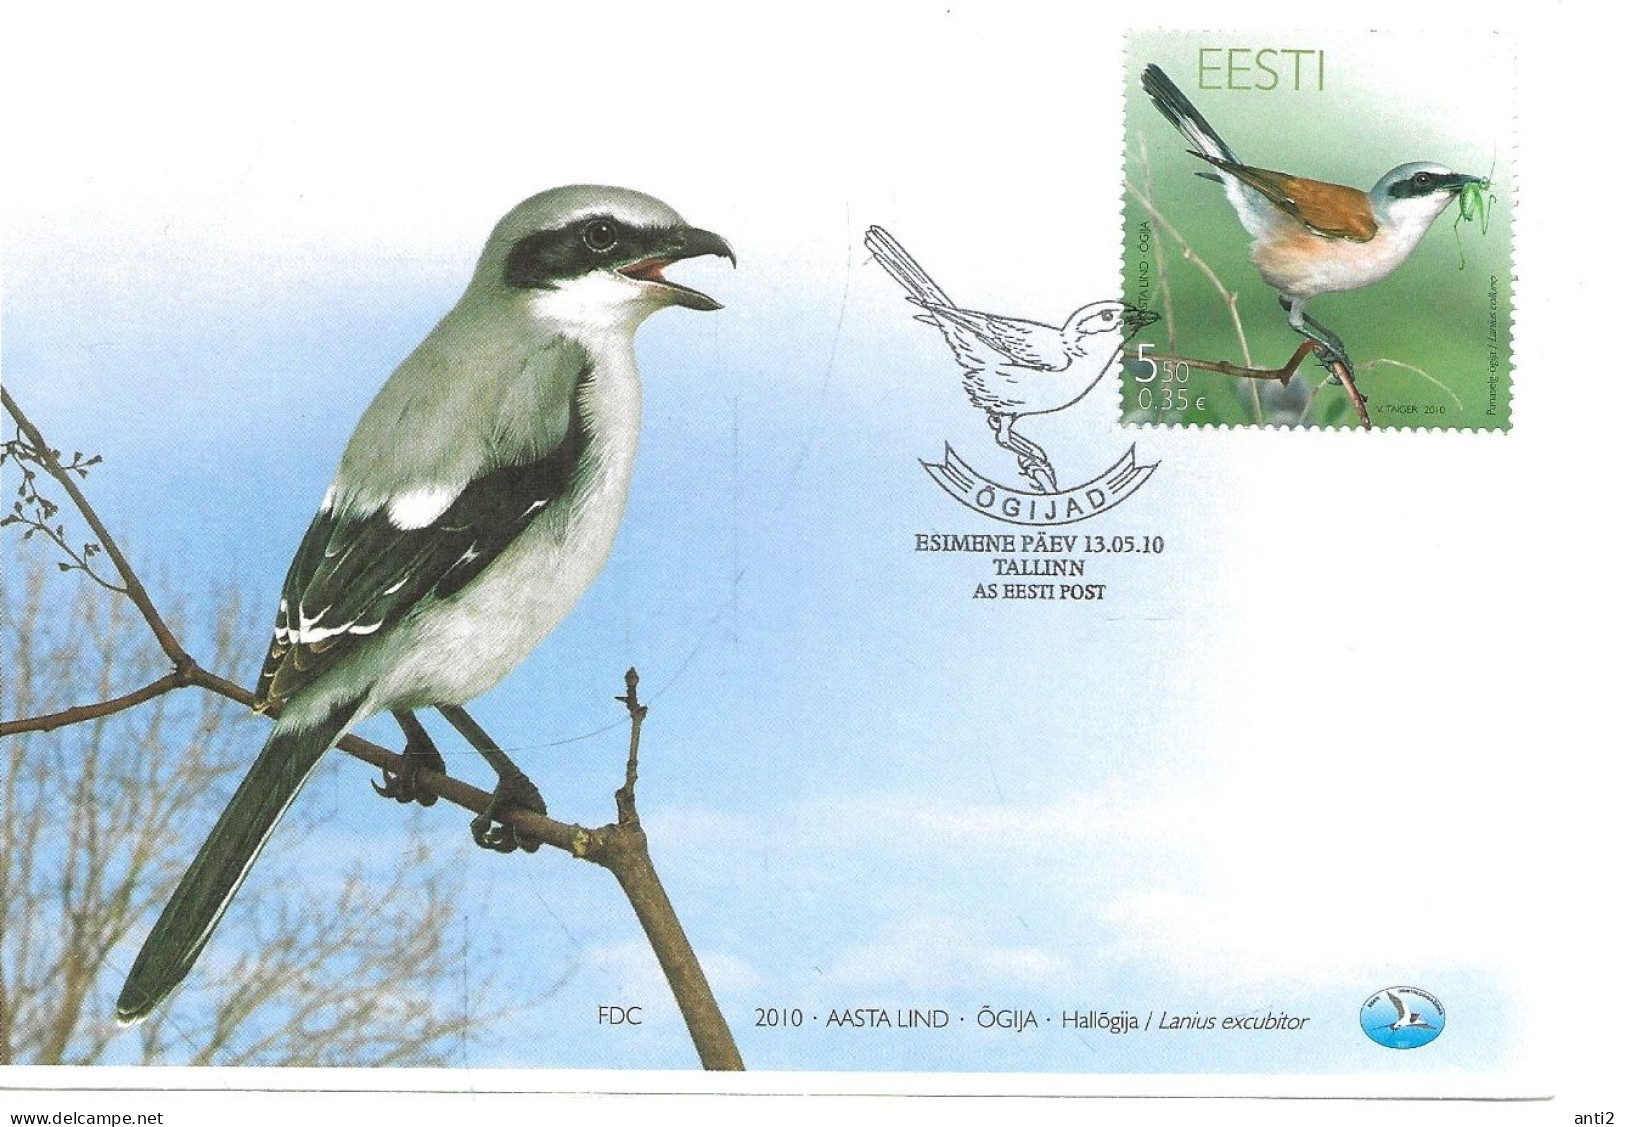 Estonia Eesti Estland 2010 Bird Of The Year. Red-backed Shrike (Lanius Collurio) Mi 666  FDC - Estonia